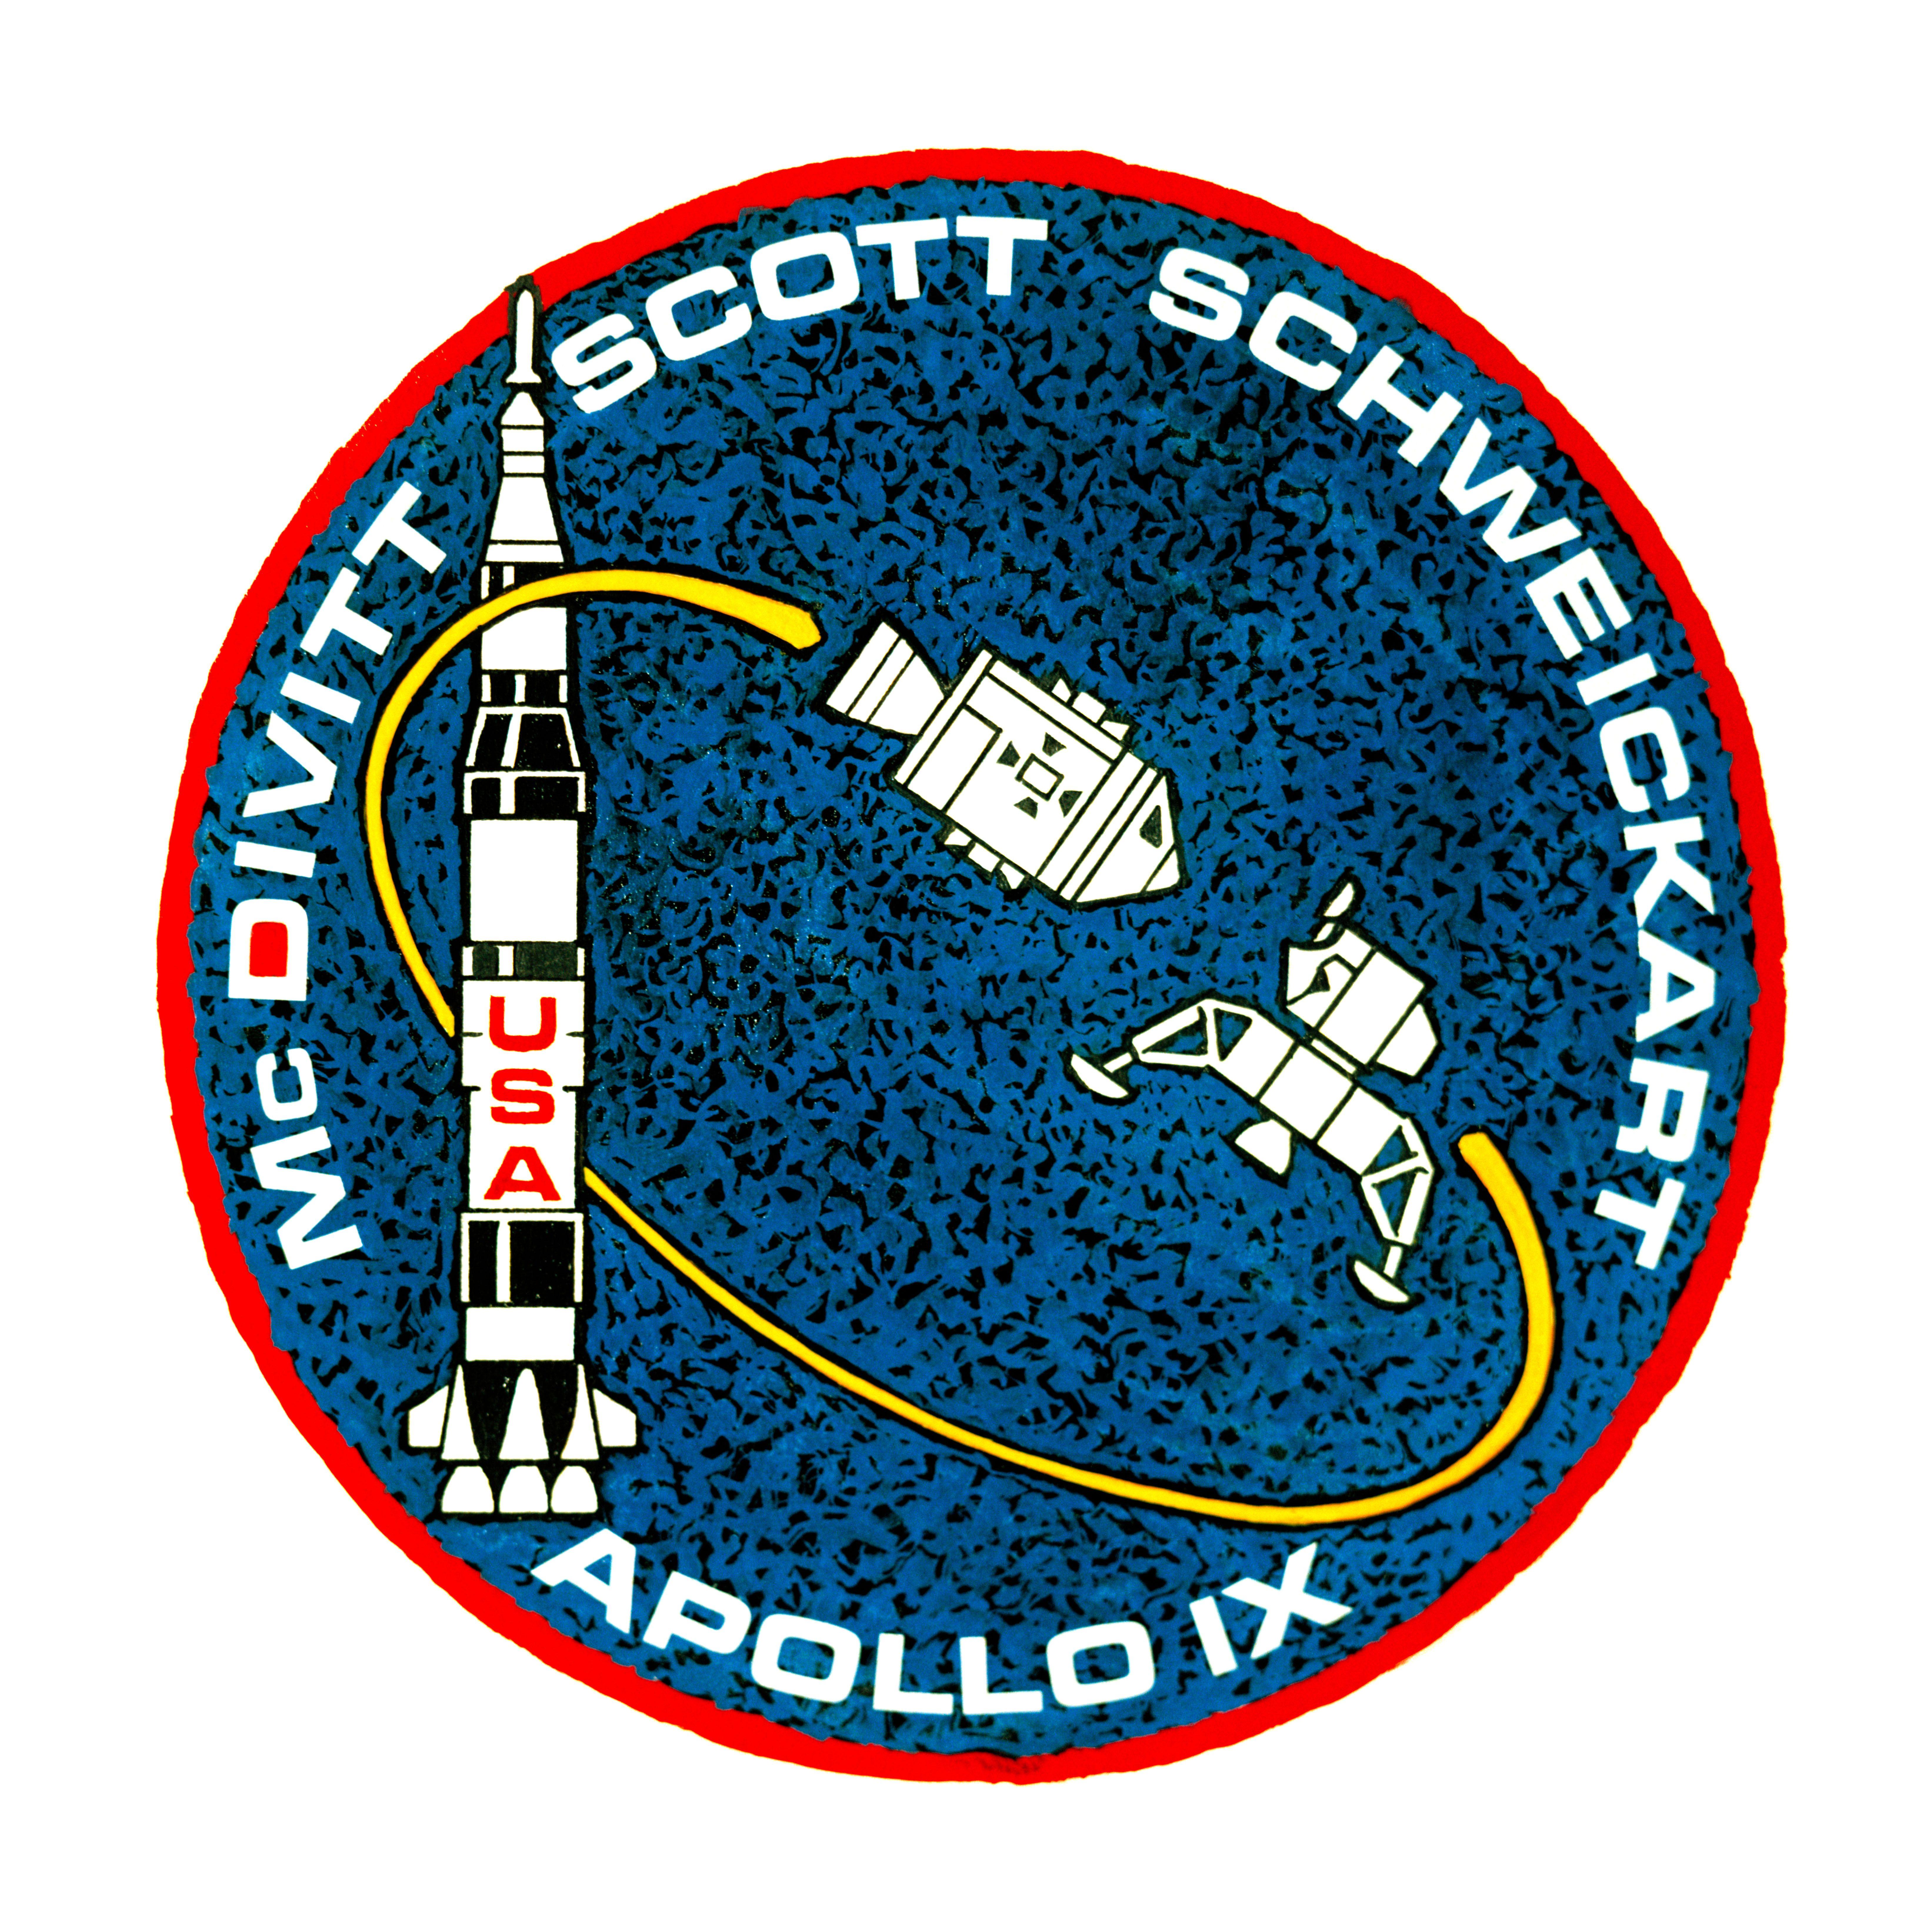 Saturn V NASA Logo - Apollo Program Mission Patches